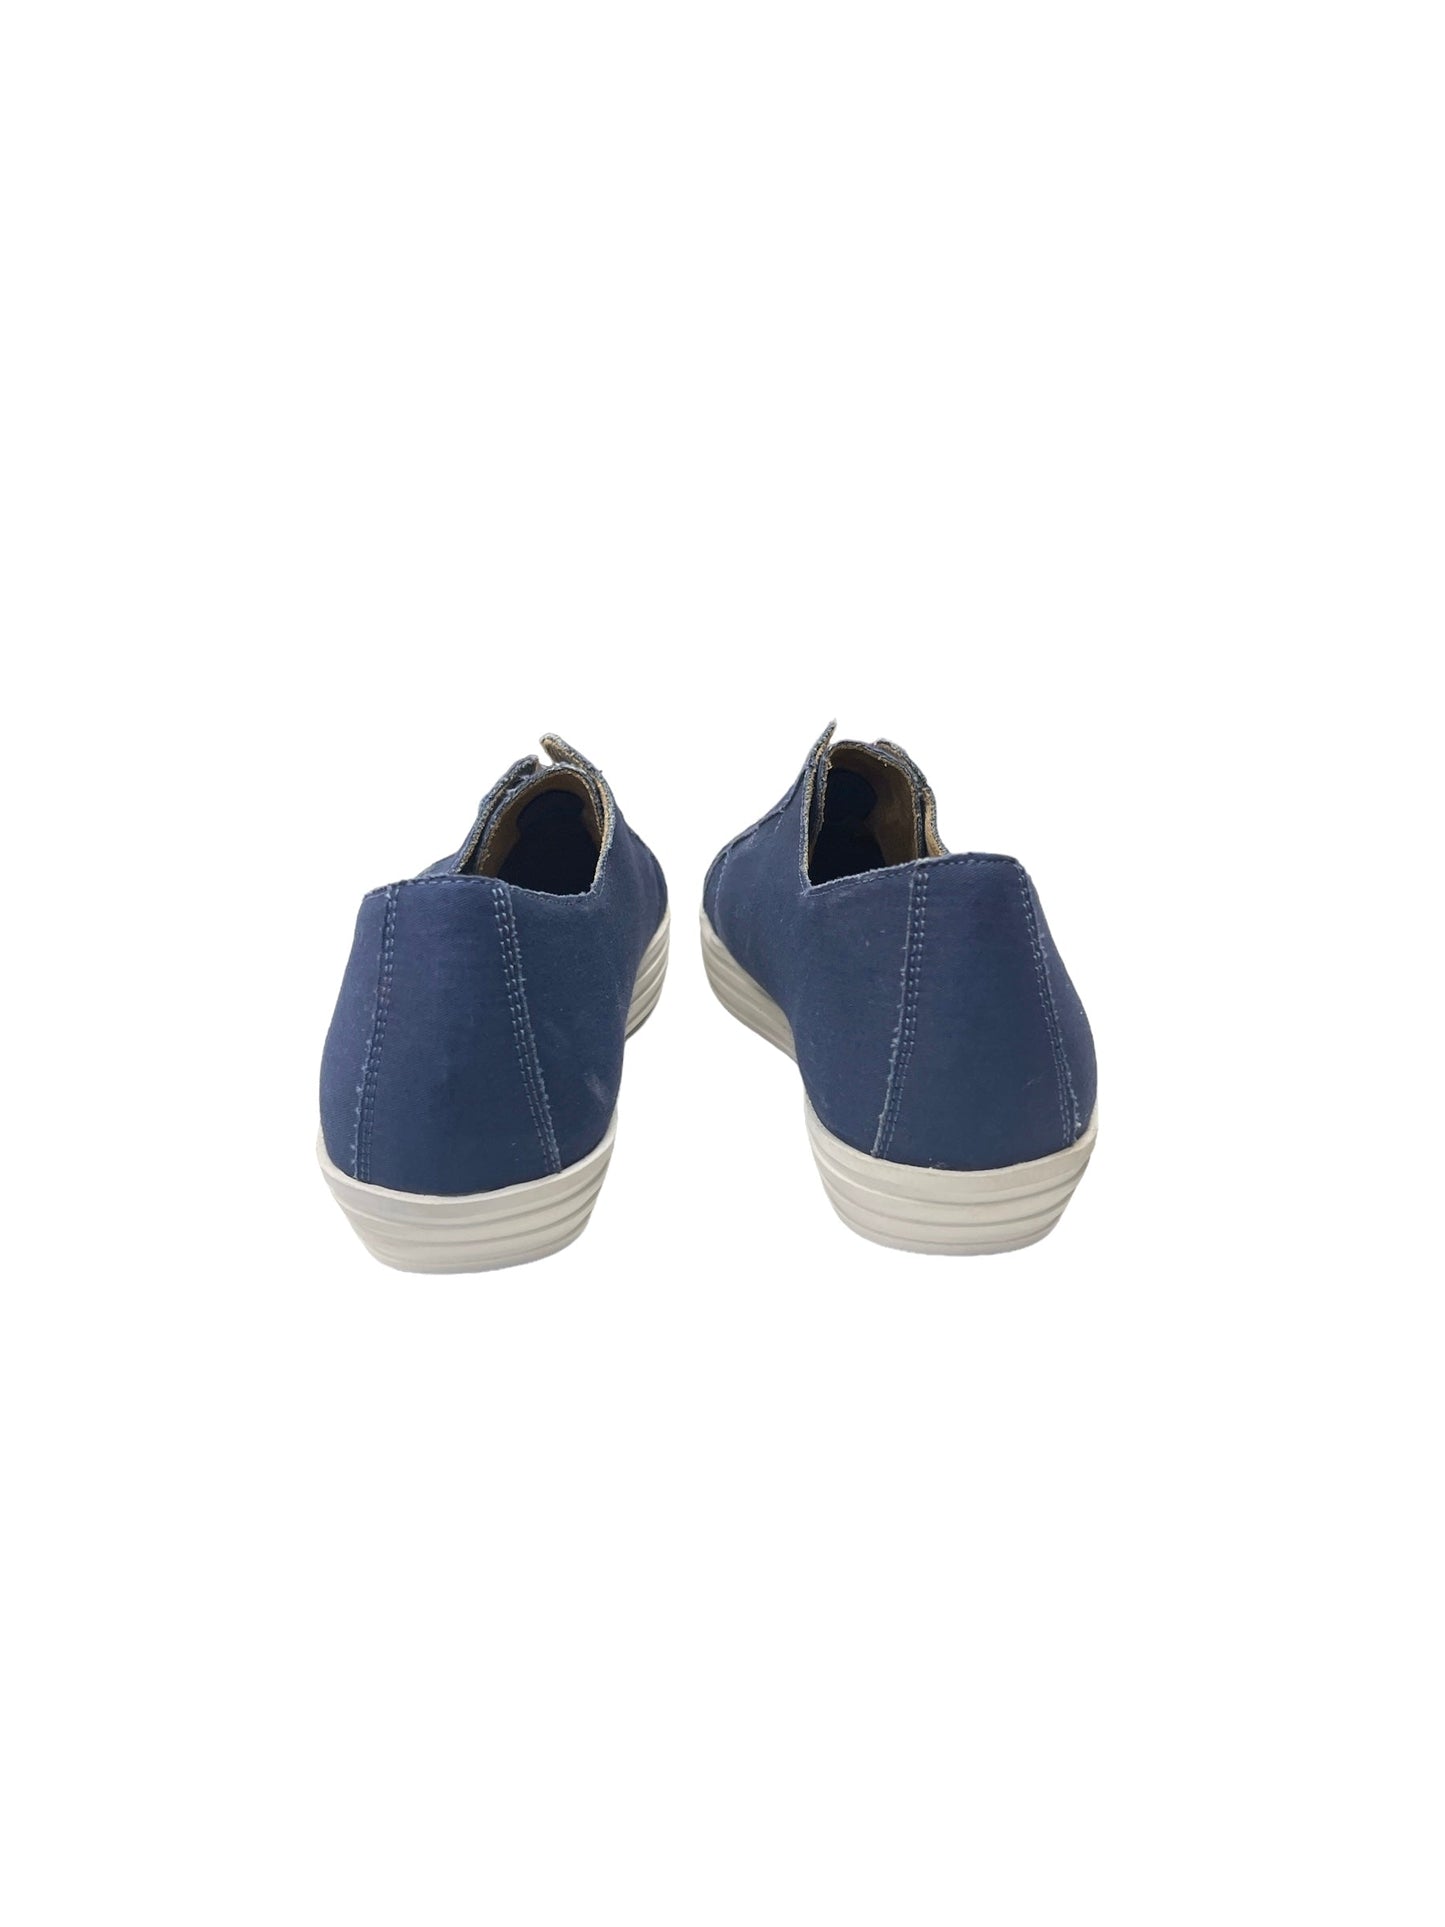 Blue Shoes Flats Aerosoles, Size 11